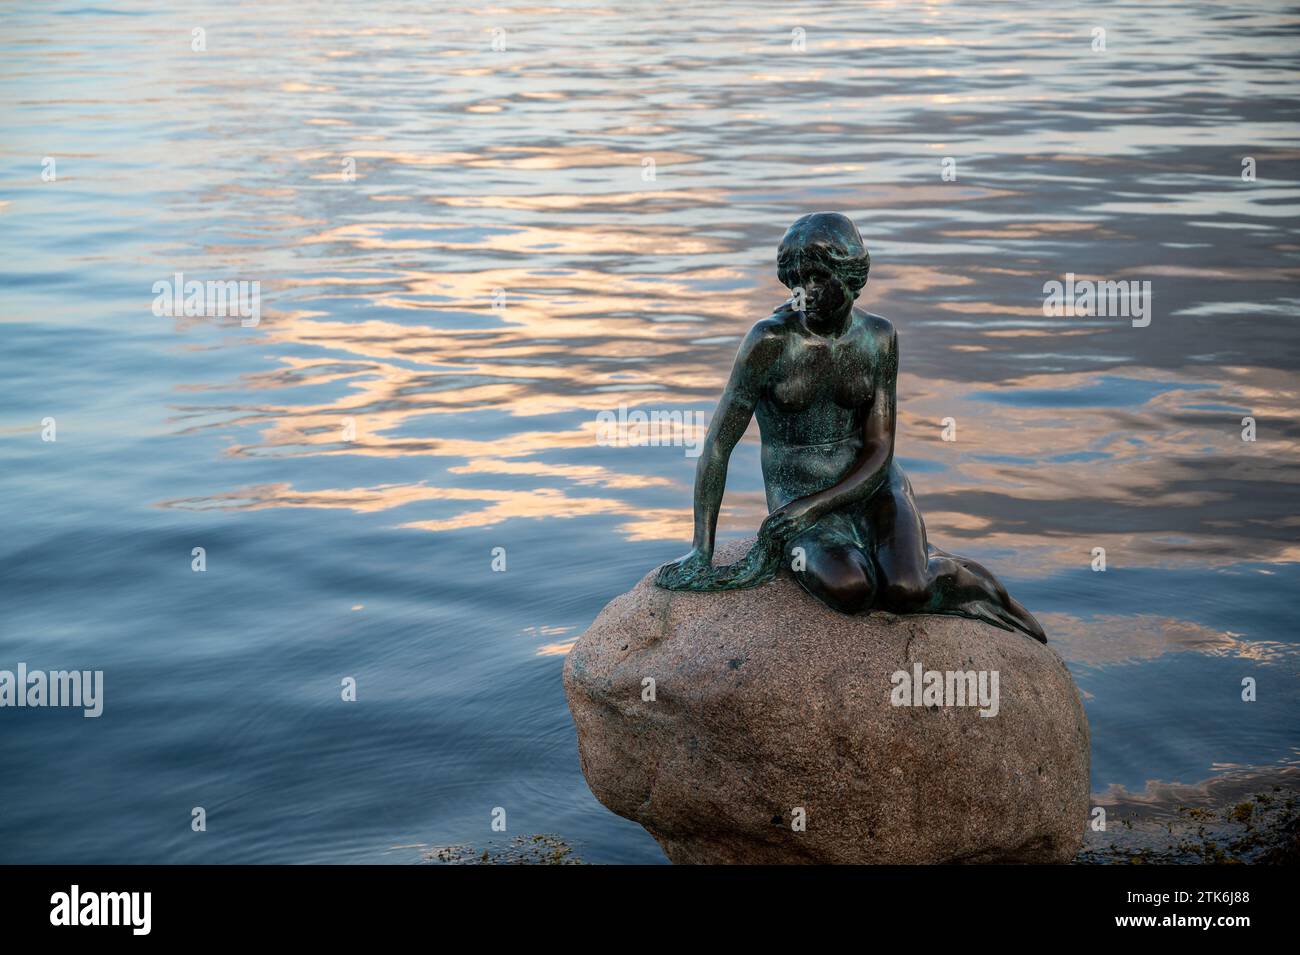 The Little Mermaid Statue at day time in Copenhagen Denmark Stock Photo